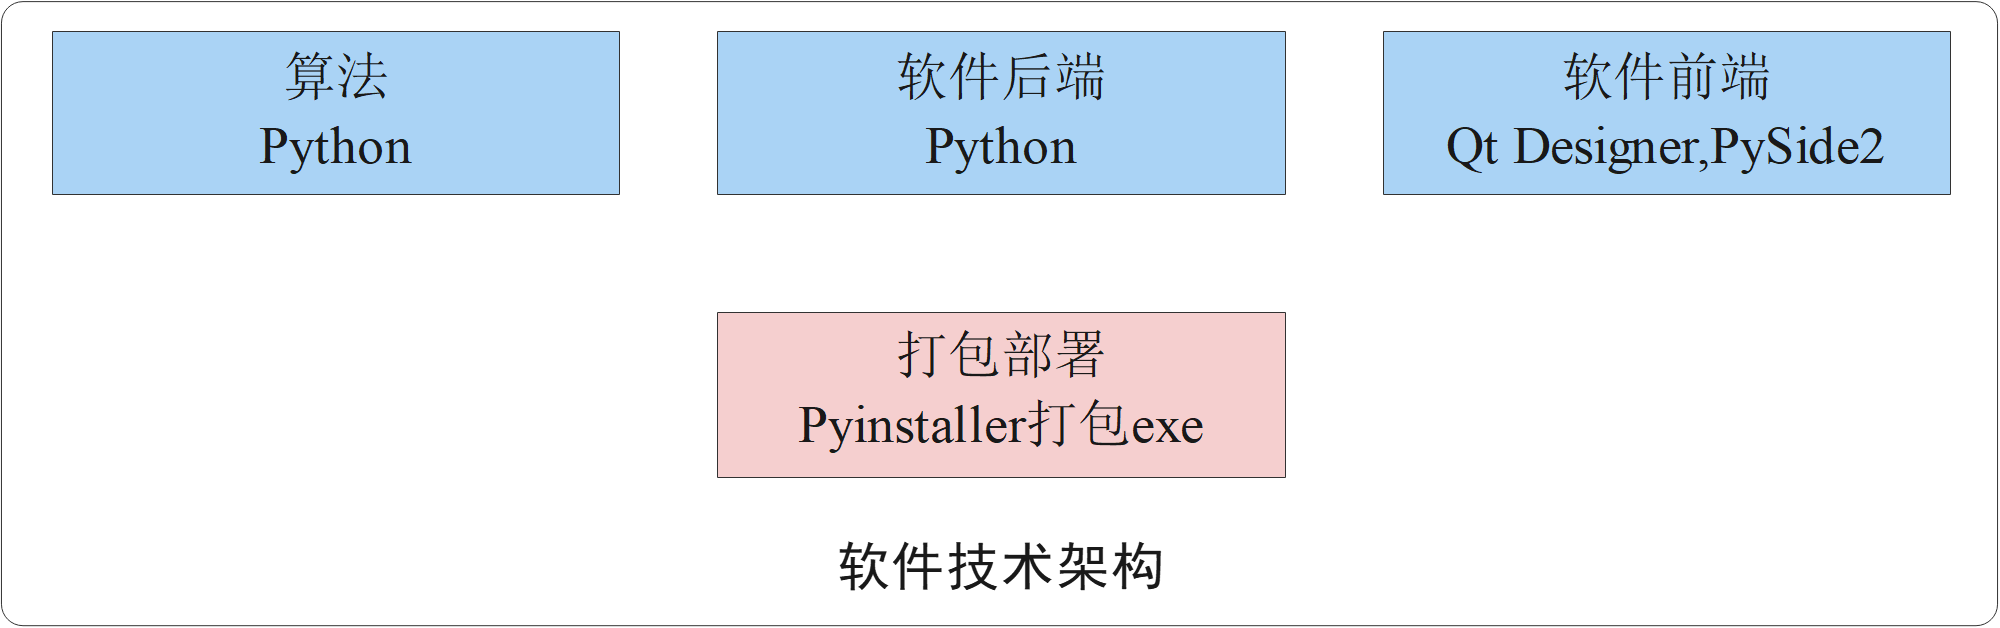 Python模型怎么封装和部署